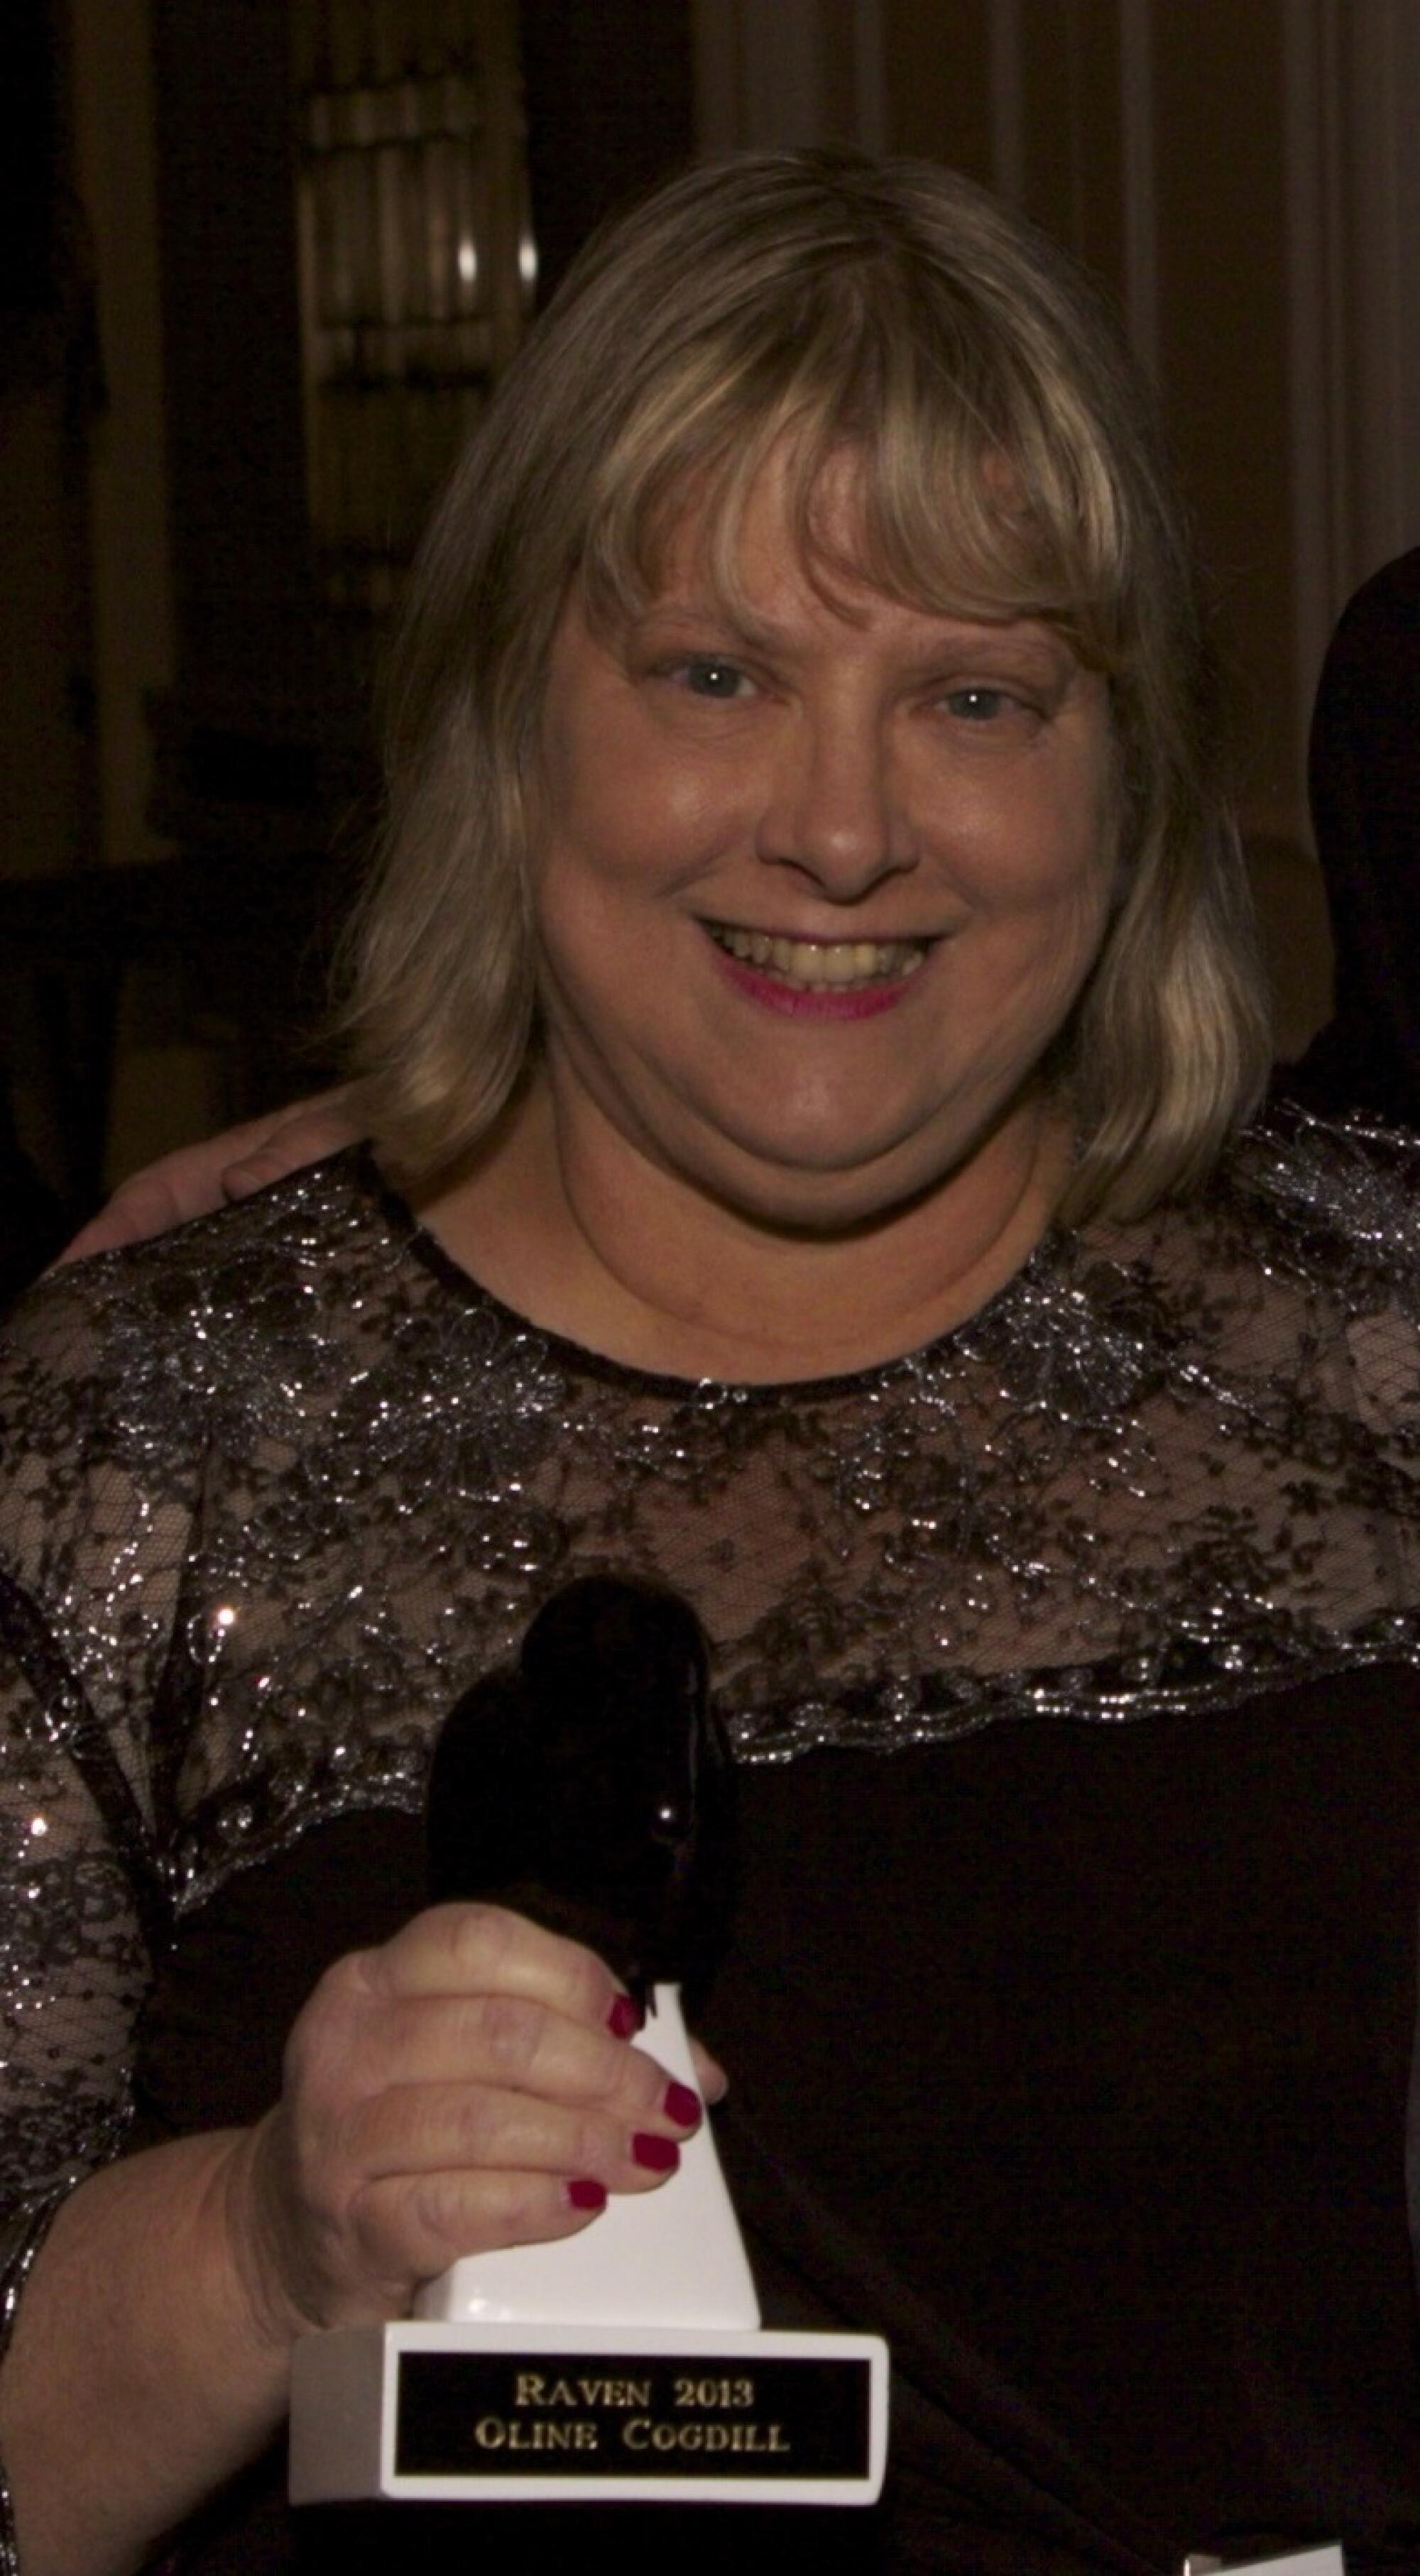 A woman holding a Raven Award statuette.